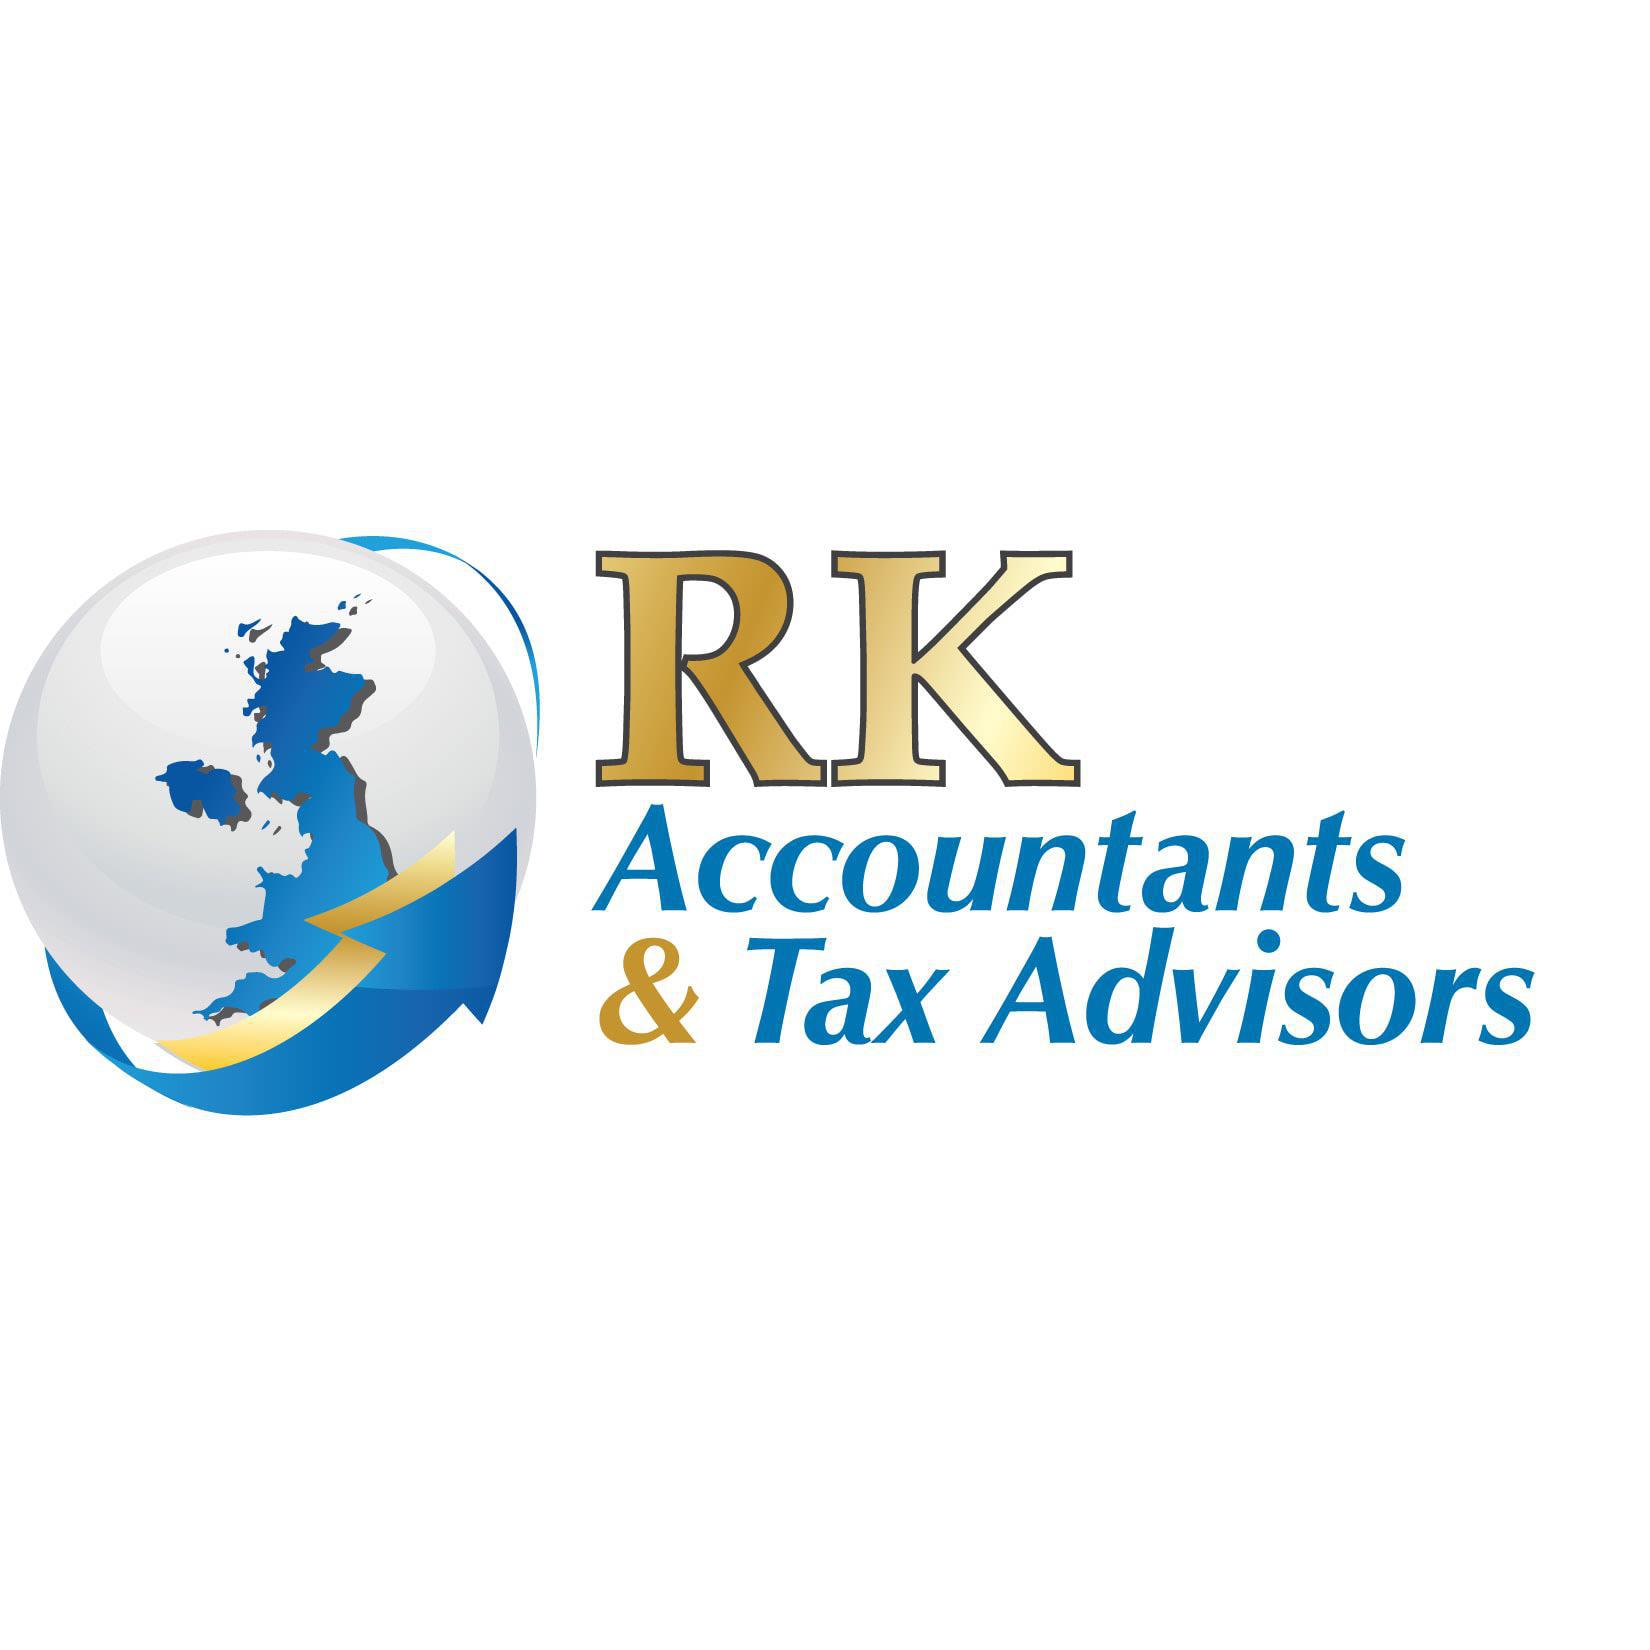 RK Accountants & Tax Advisors - Bradford, West Yorkshire BD4 8AN - 01274 499699 | ShowMeLocal.com